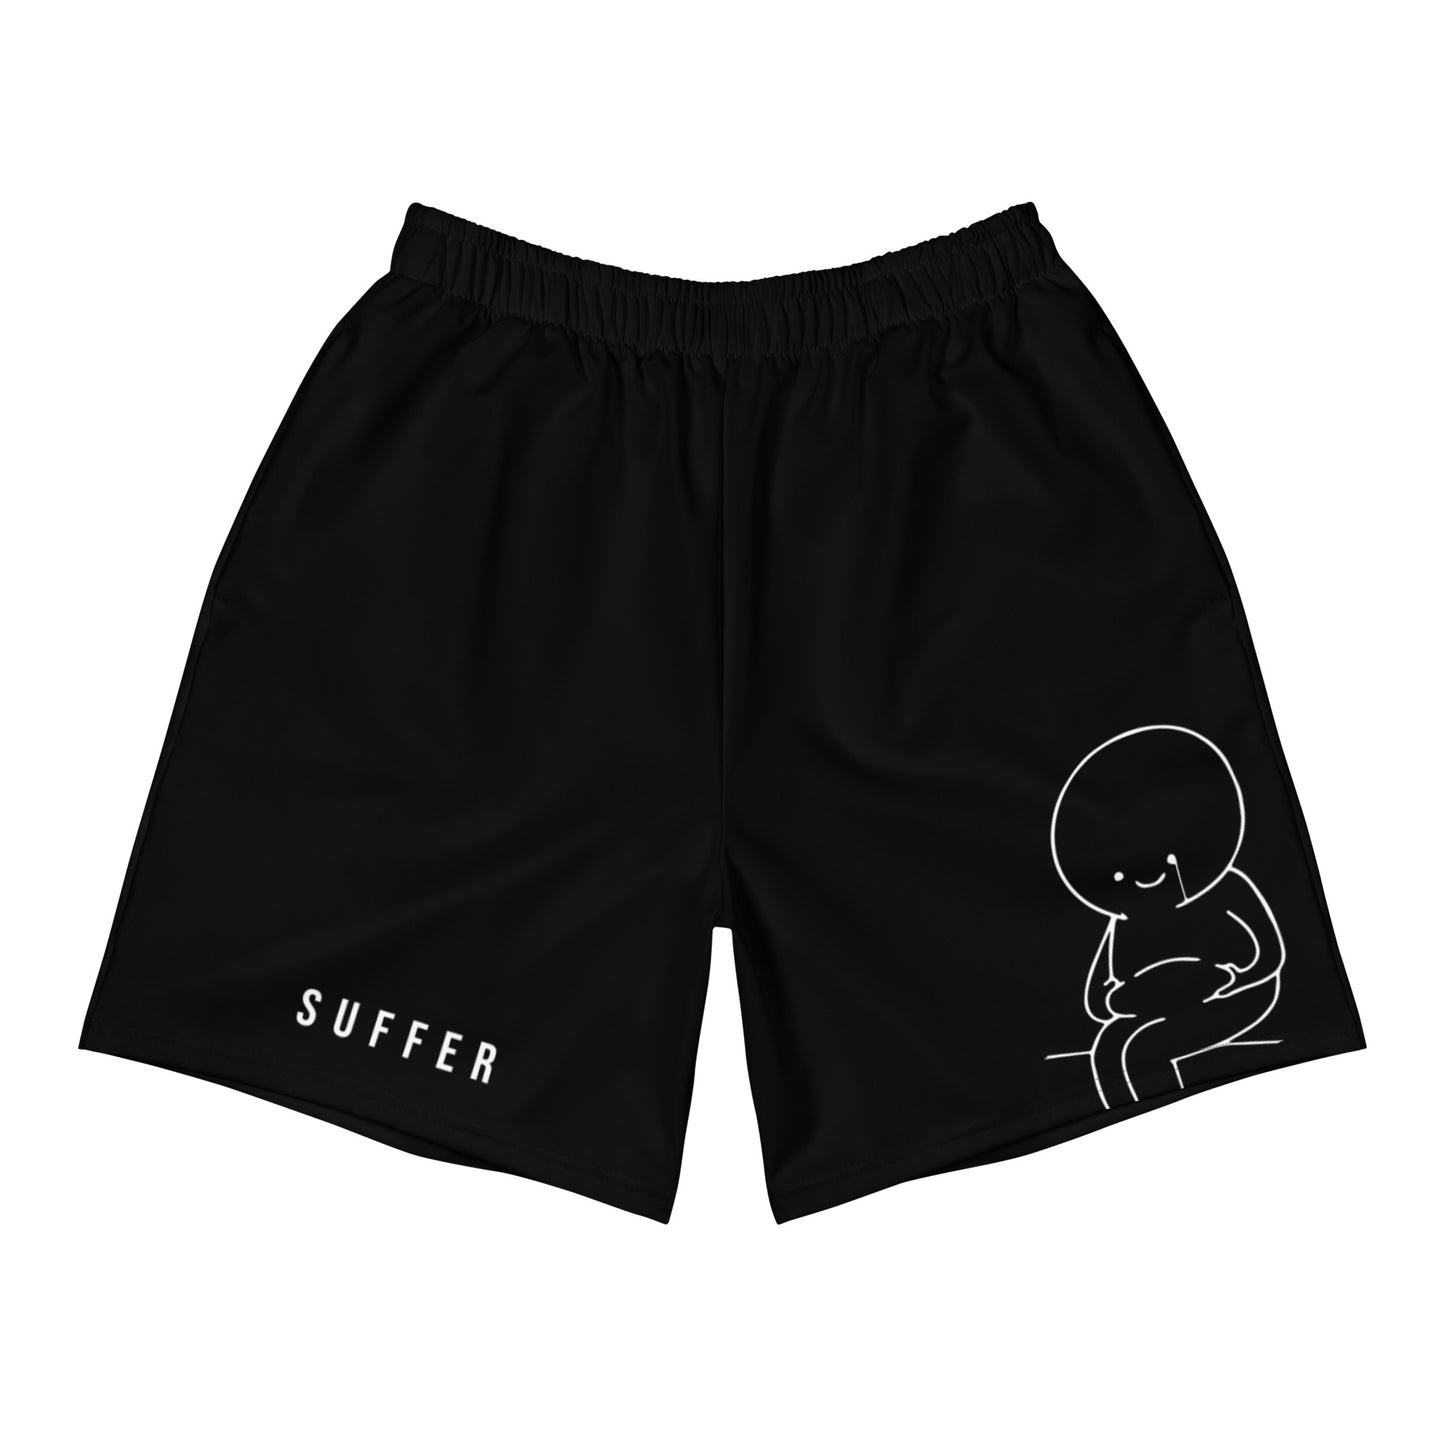 SUFFER  Mascot Athletic Shorts